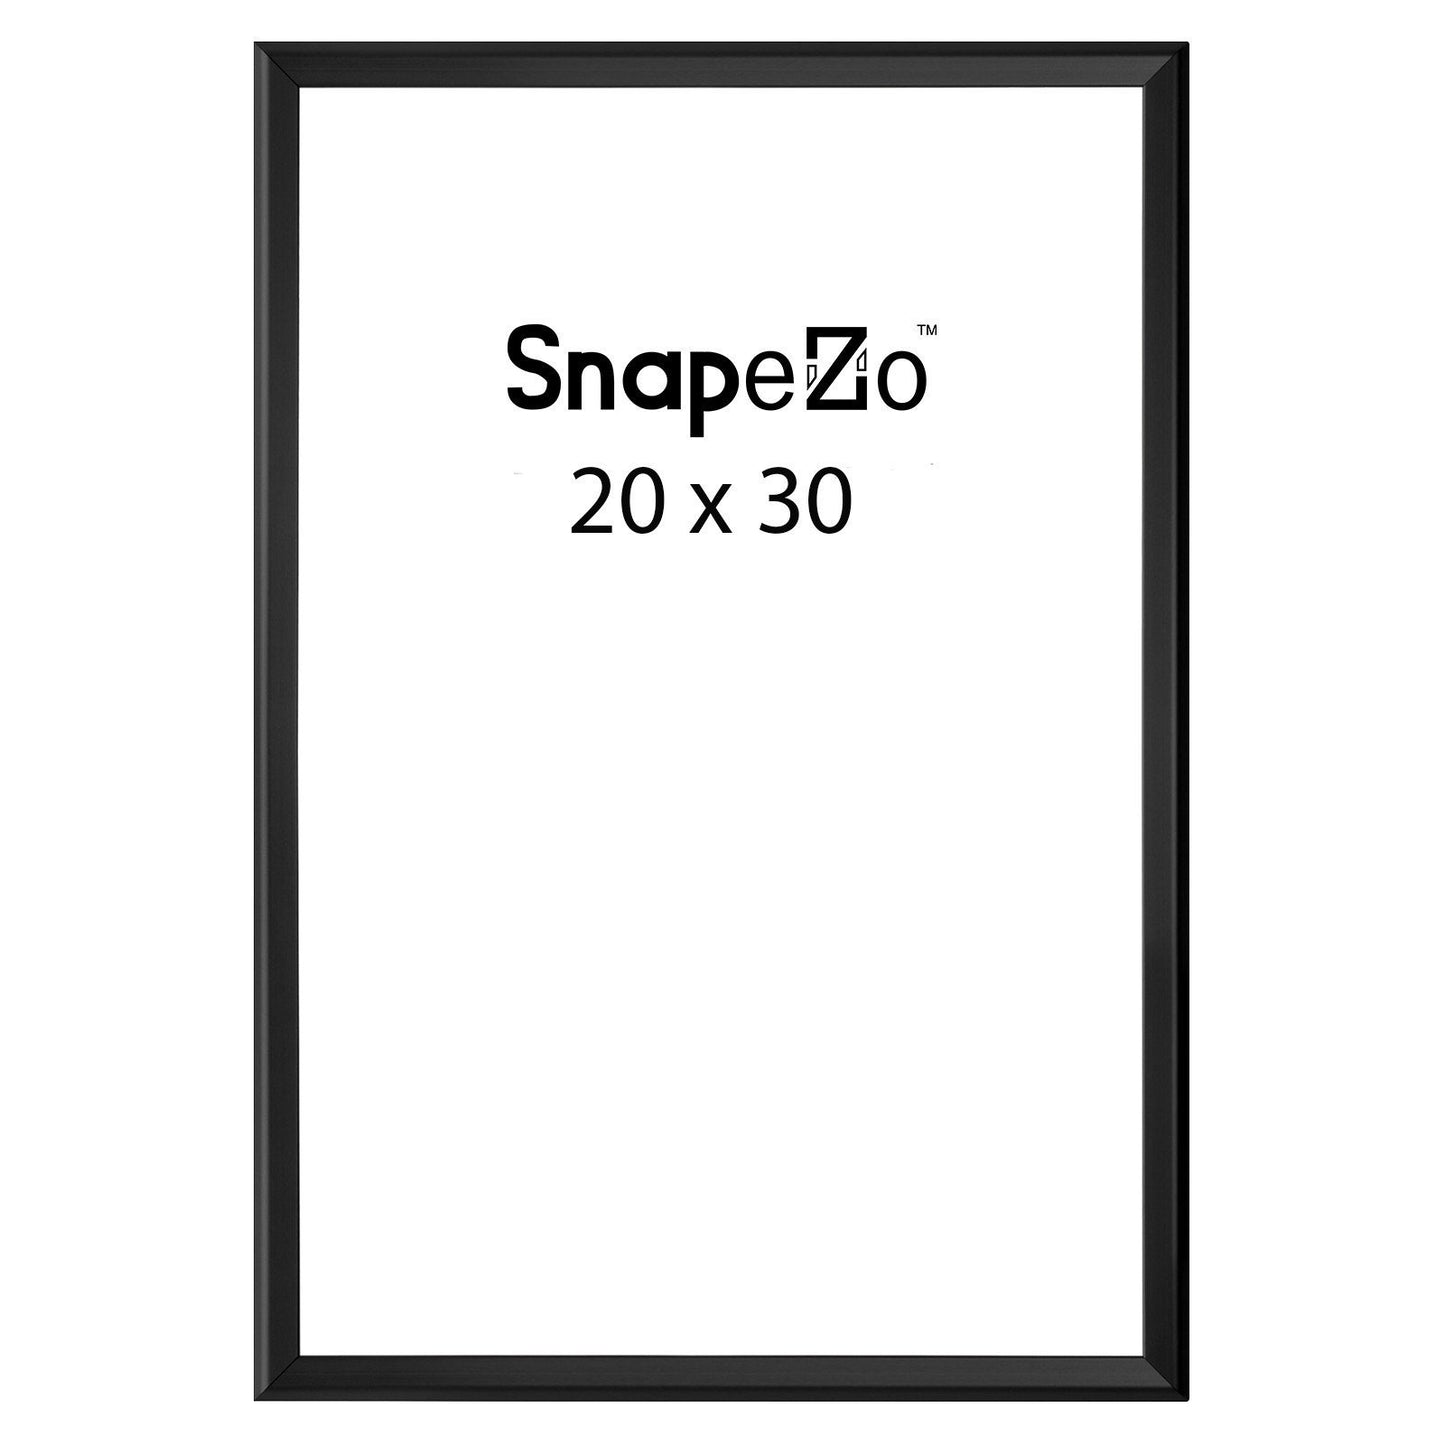 Black SnapeZo® snap frame poster size 20X30 - 1.8 inch profile